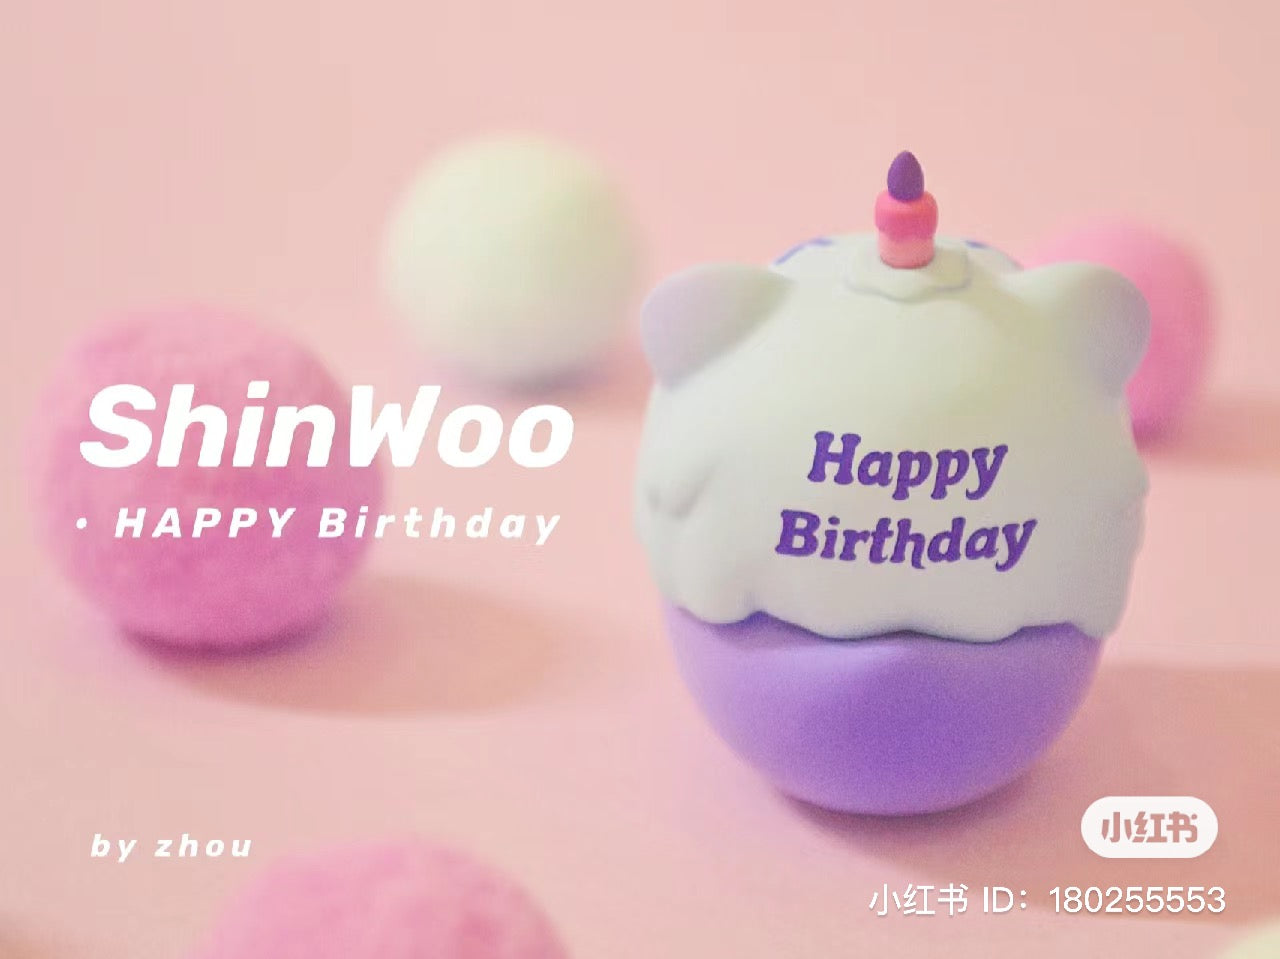 Shinwoo Happy Birthday - Bite